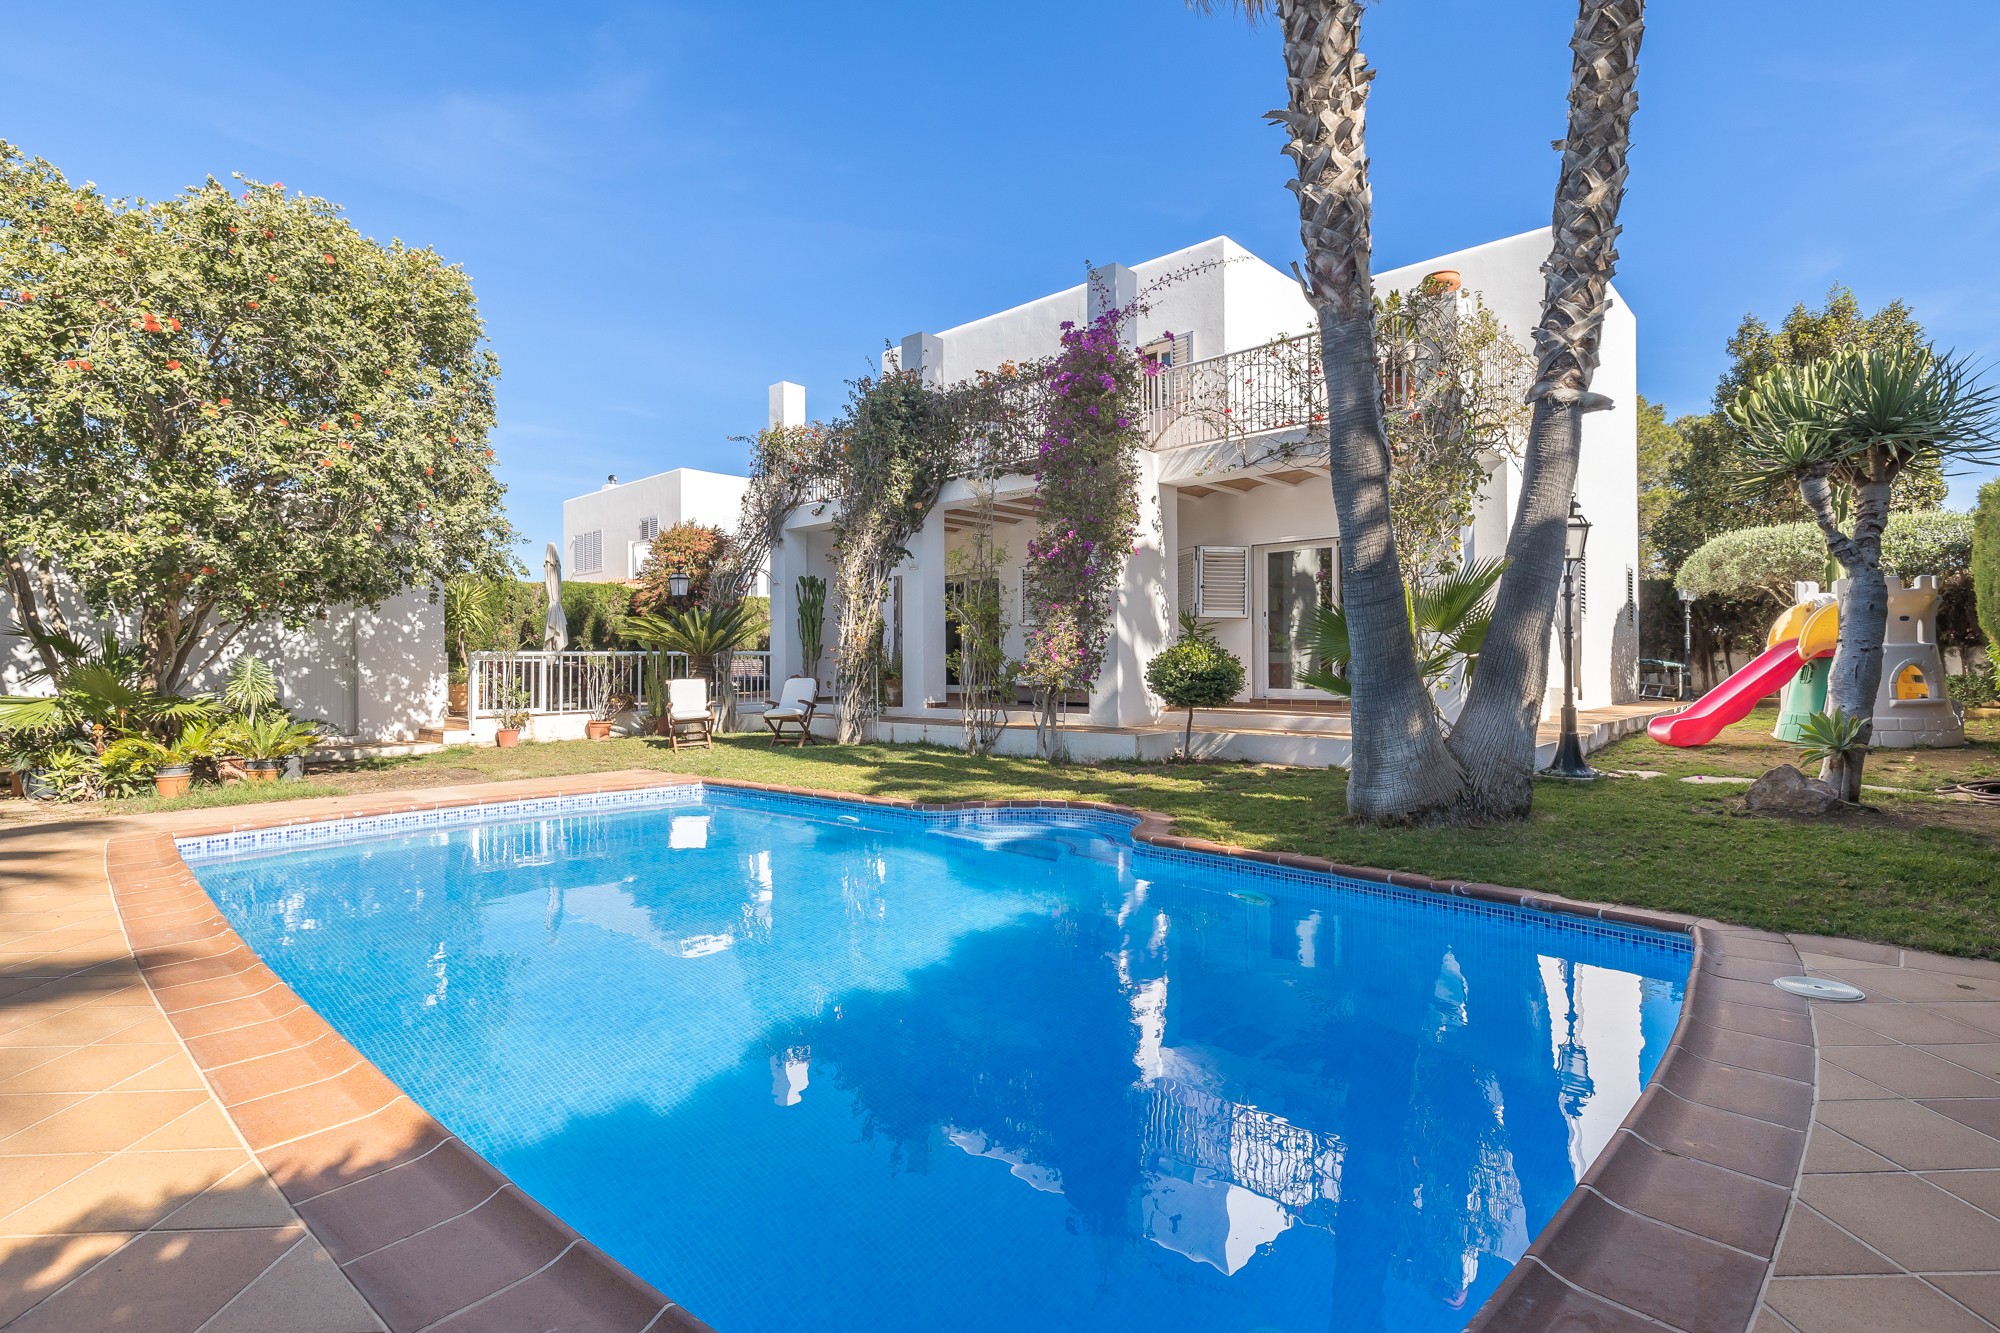 Mediterranean villa with pool - 2